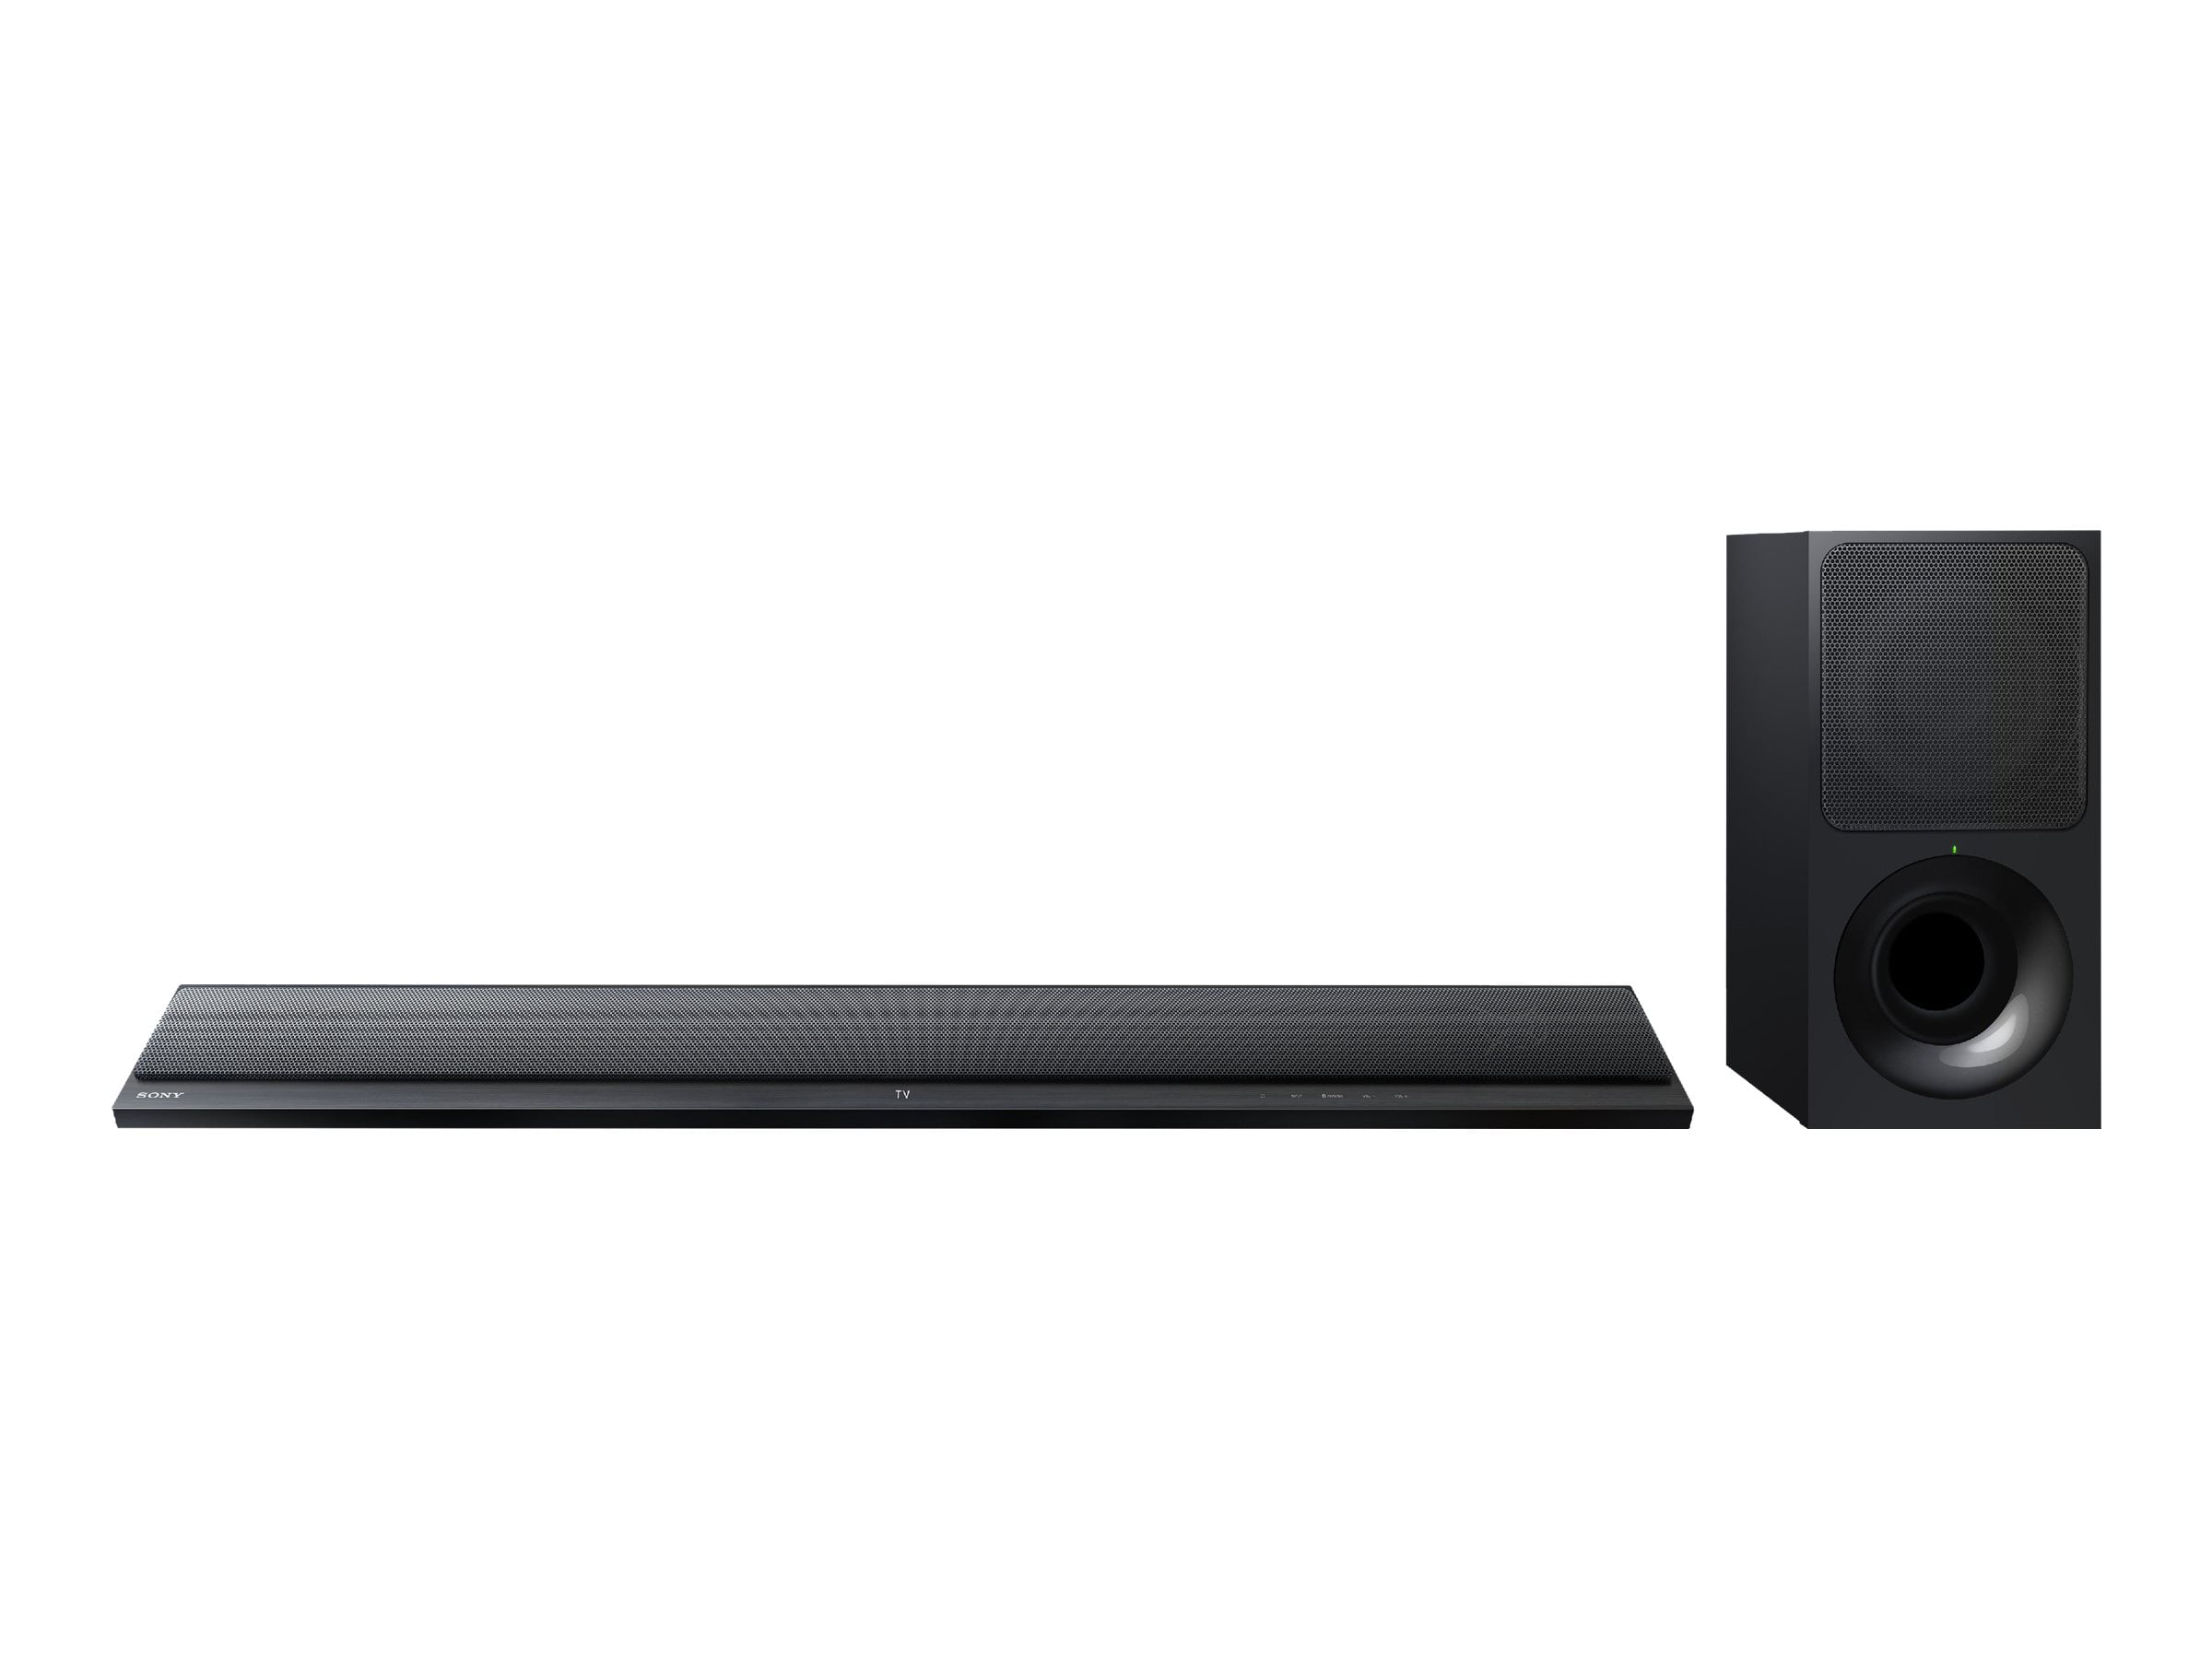 målbar Modish dybde Sony HT-CT390 2.1 Bluetooth Speaker System, 300 W RMS, Black - Walmart.com